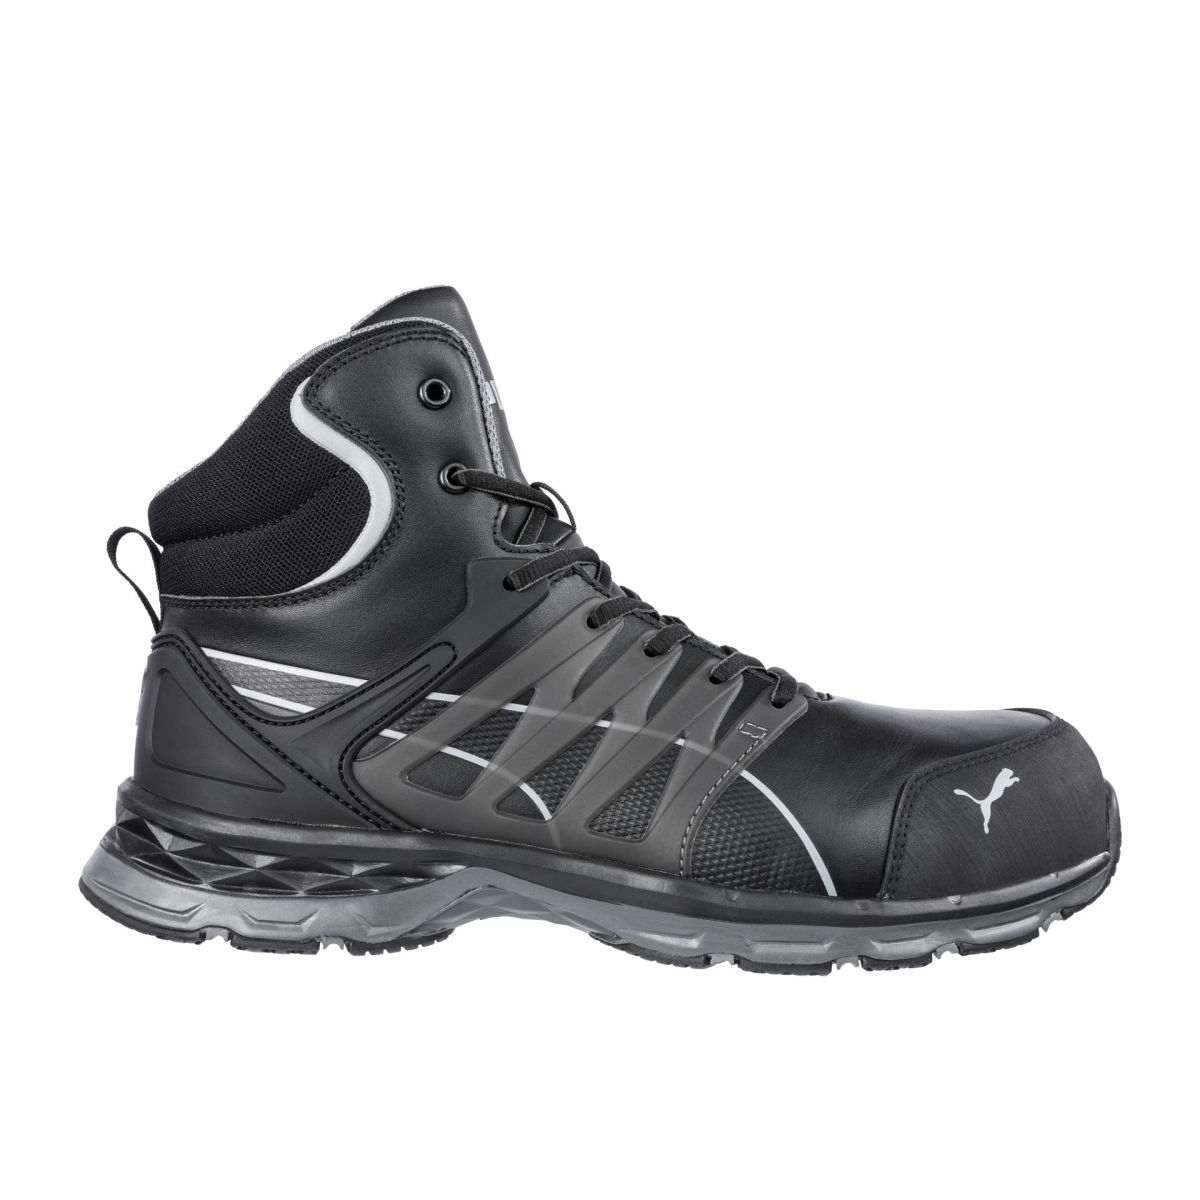 PUMA Safety Men's Velocity 2.0 Mid Composite Toe ESD Work Boot Black - 633805 ONE SIZE BLACK - BLACK, 8.5